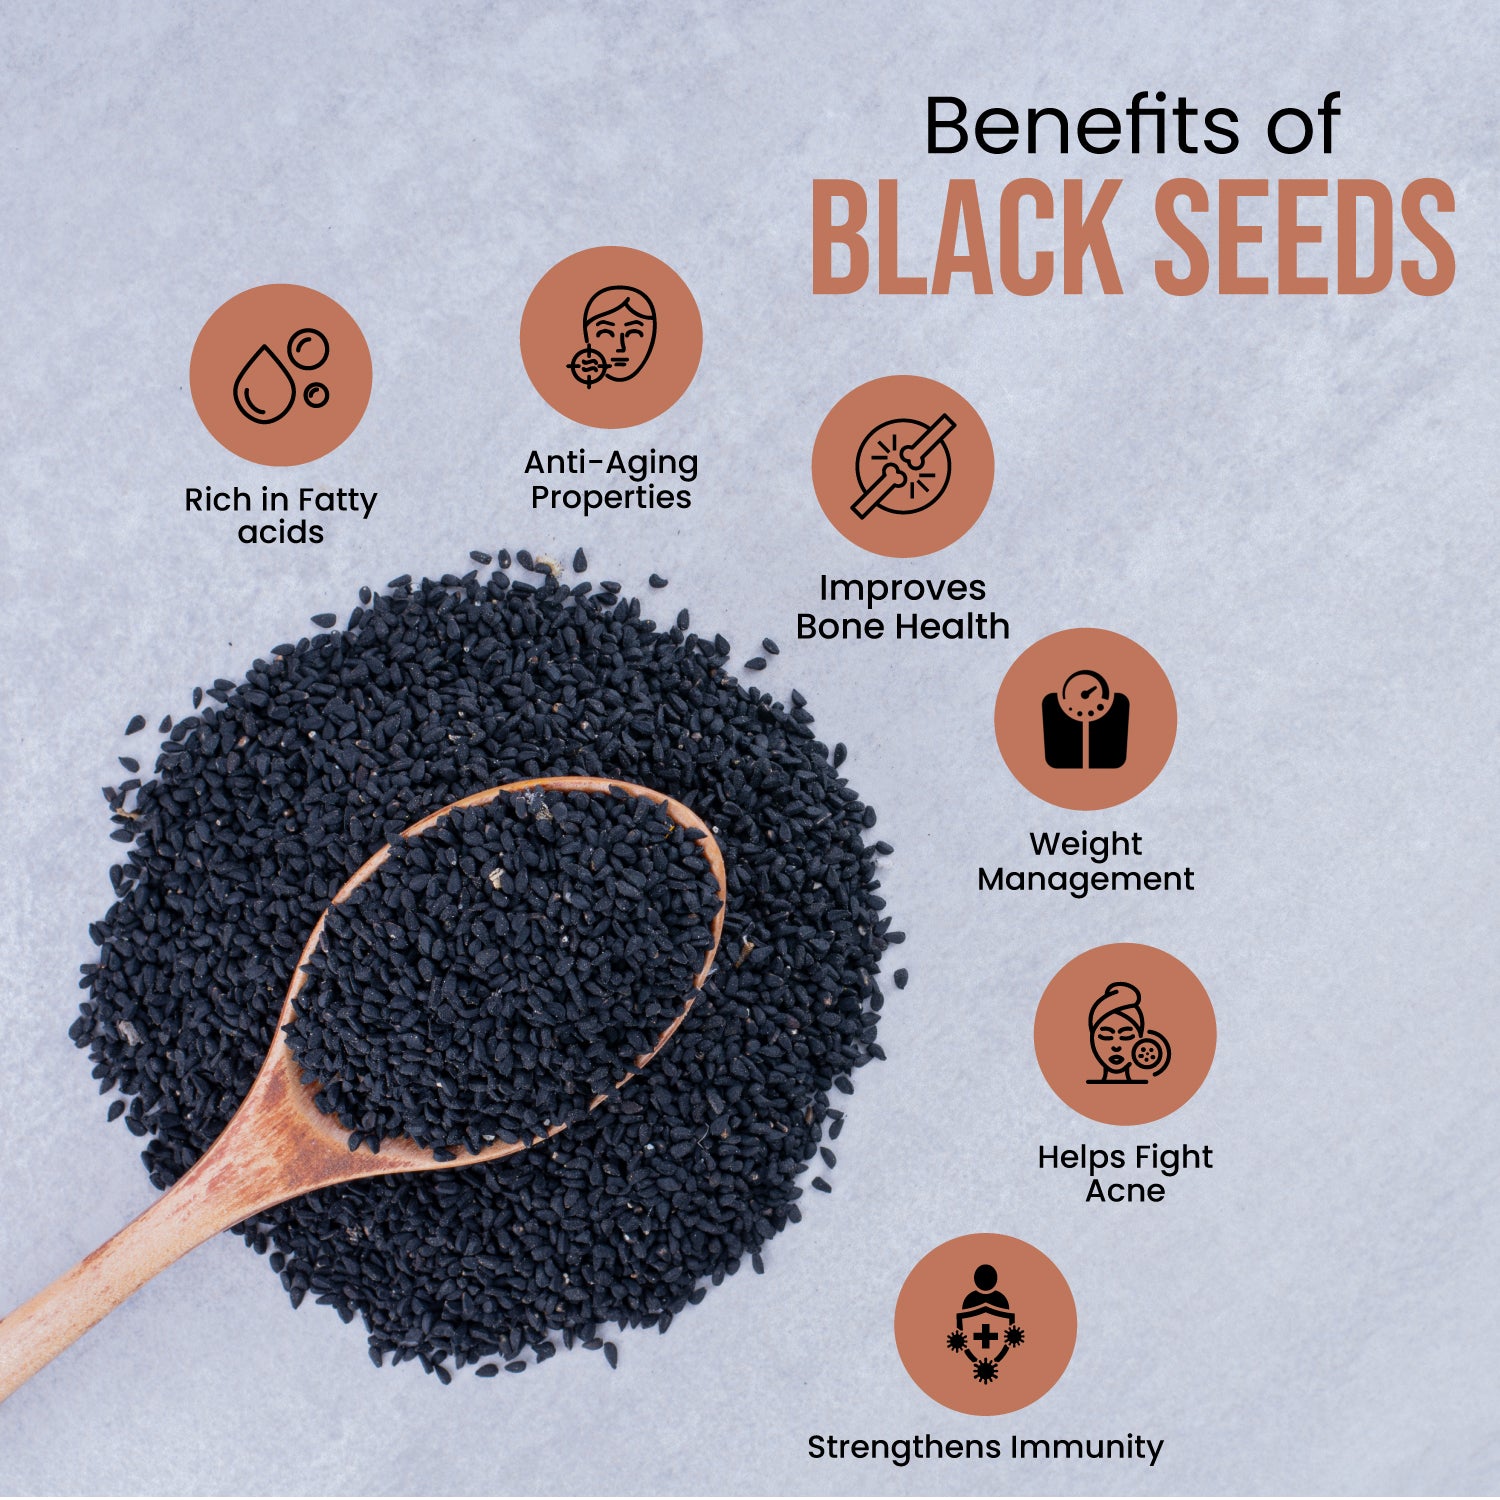 ECONBIO ROOTS 100% Natural Seeds Combo | Black 150g, Halim 200g & Basil Seeds | 200g (Pack of 3)